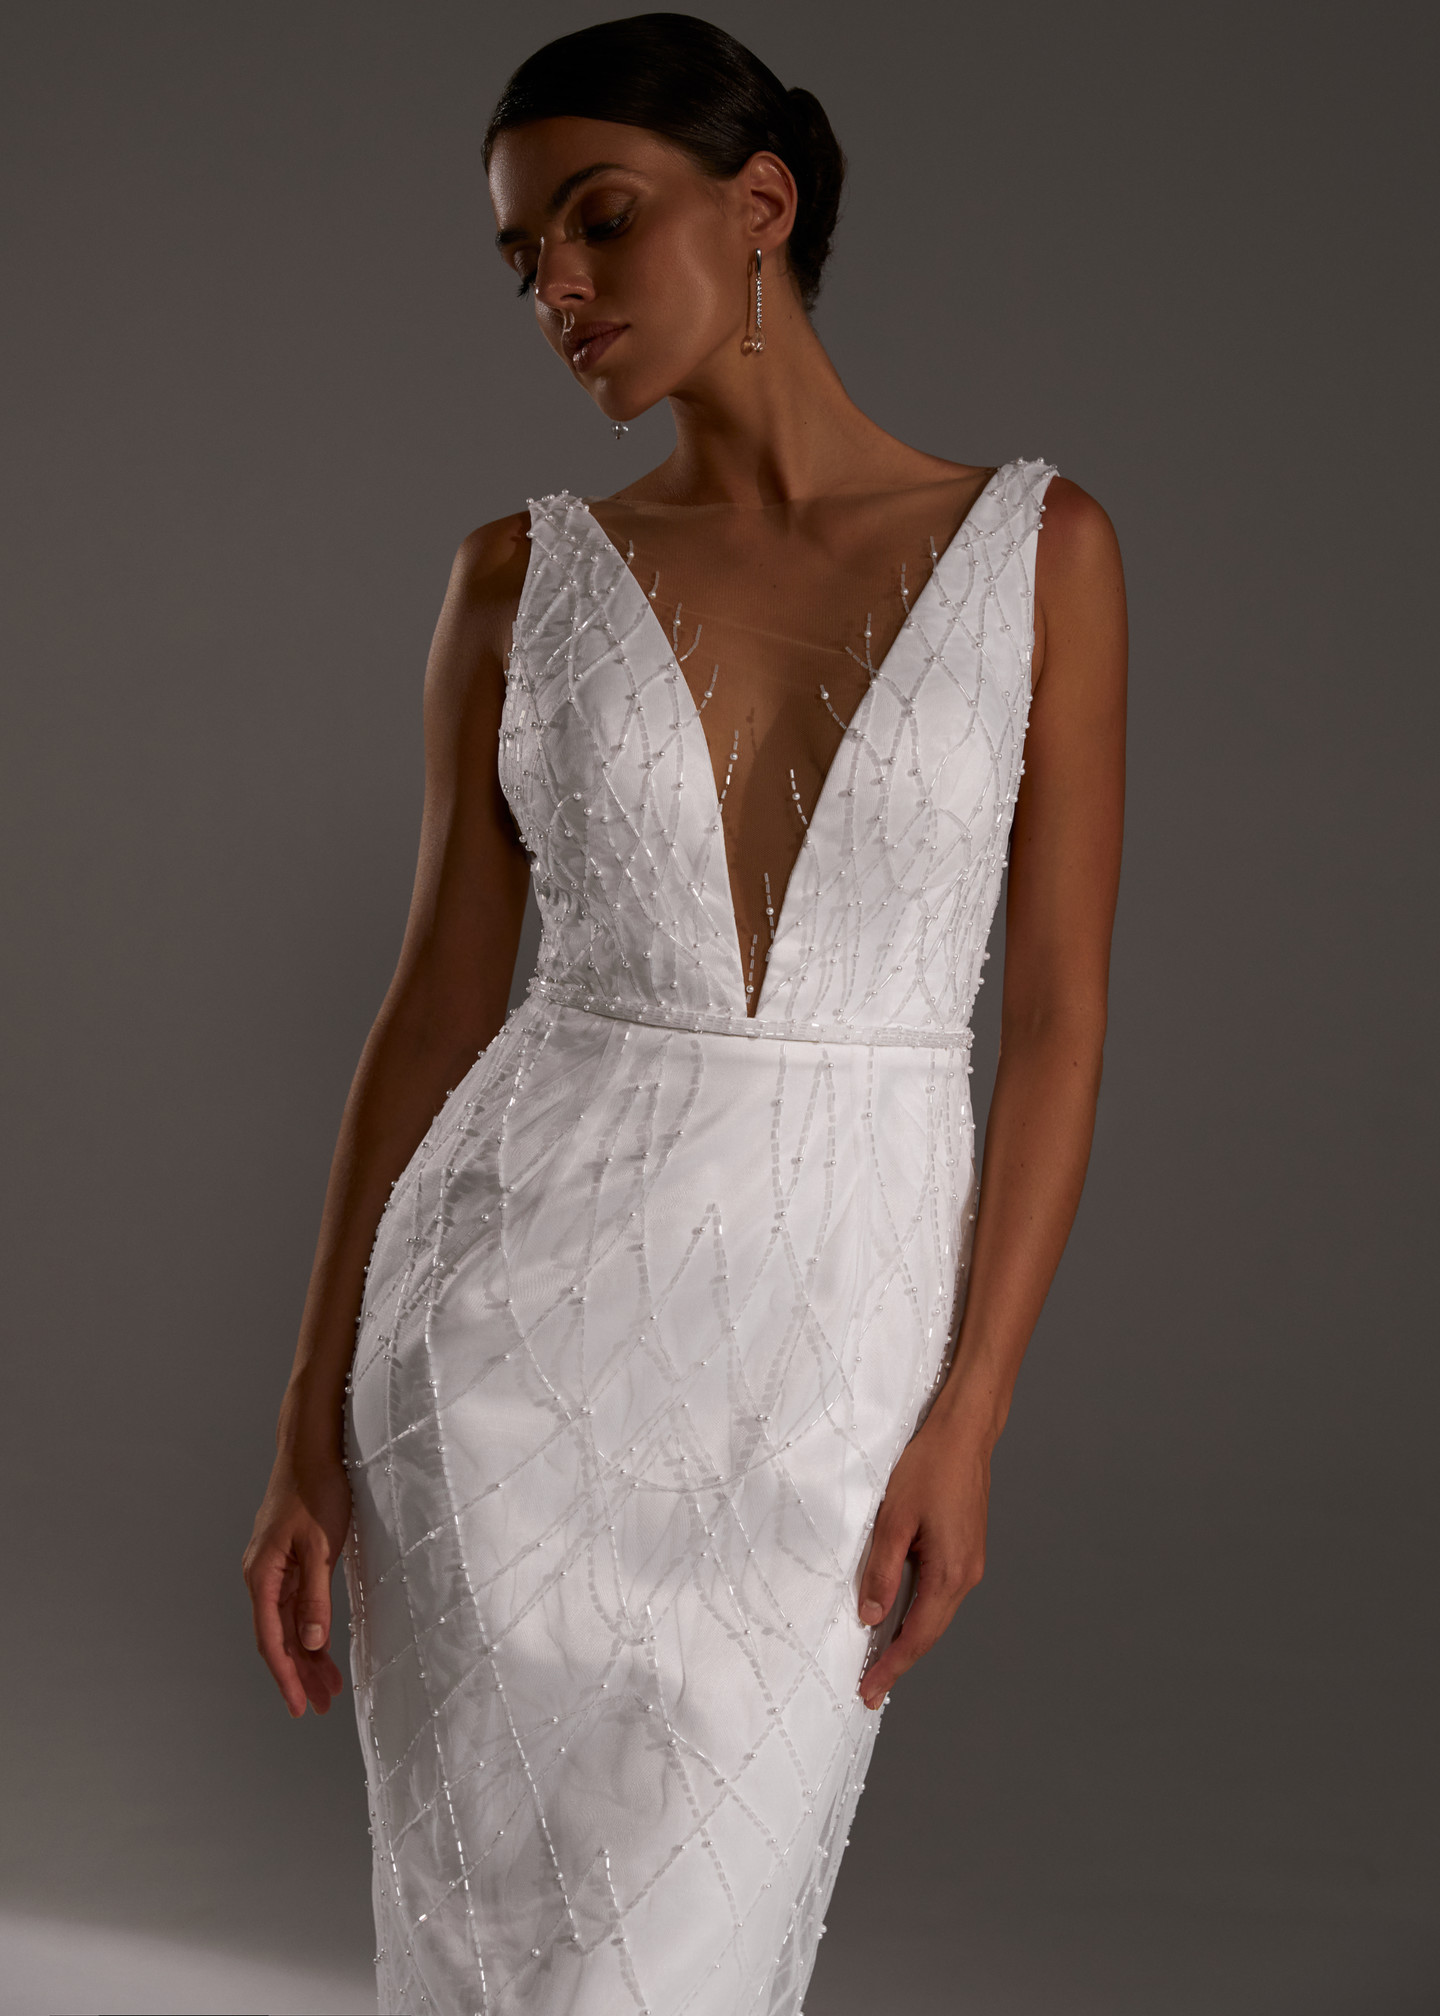 Ottavia dress, 2021, couture, dress, bridal, off-white, embroidery, sheath silhouette